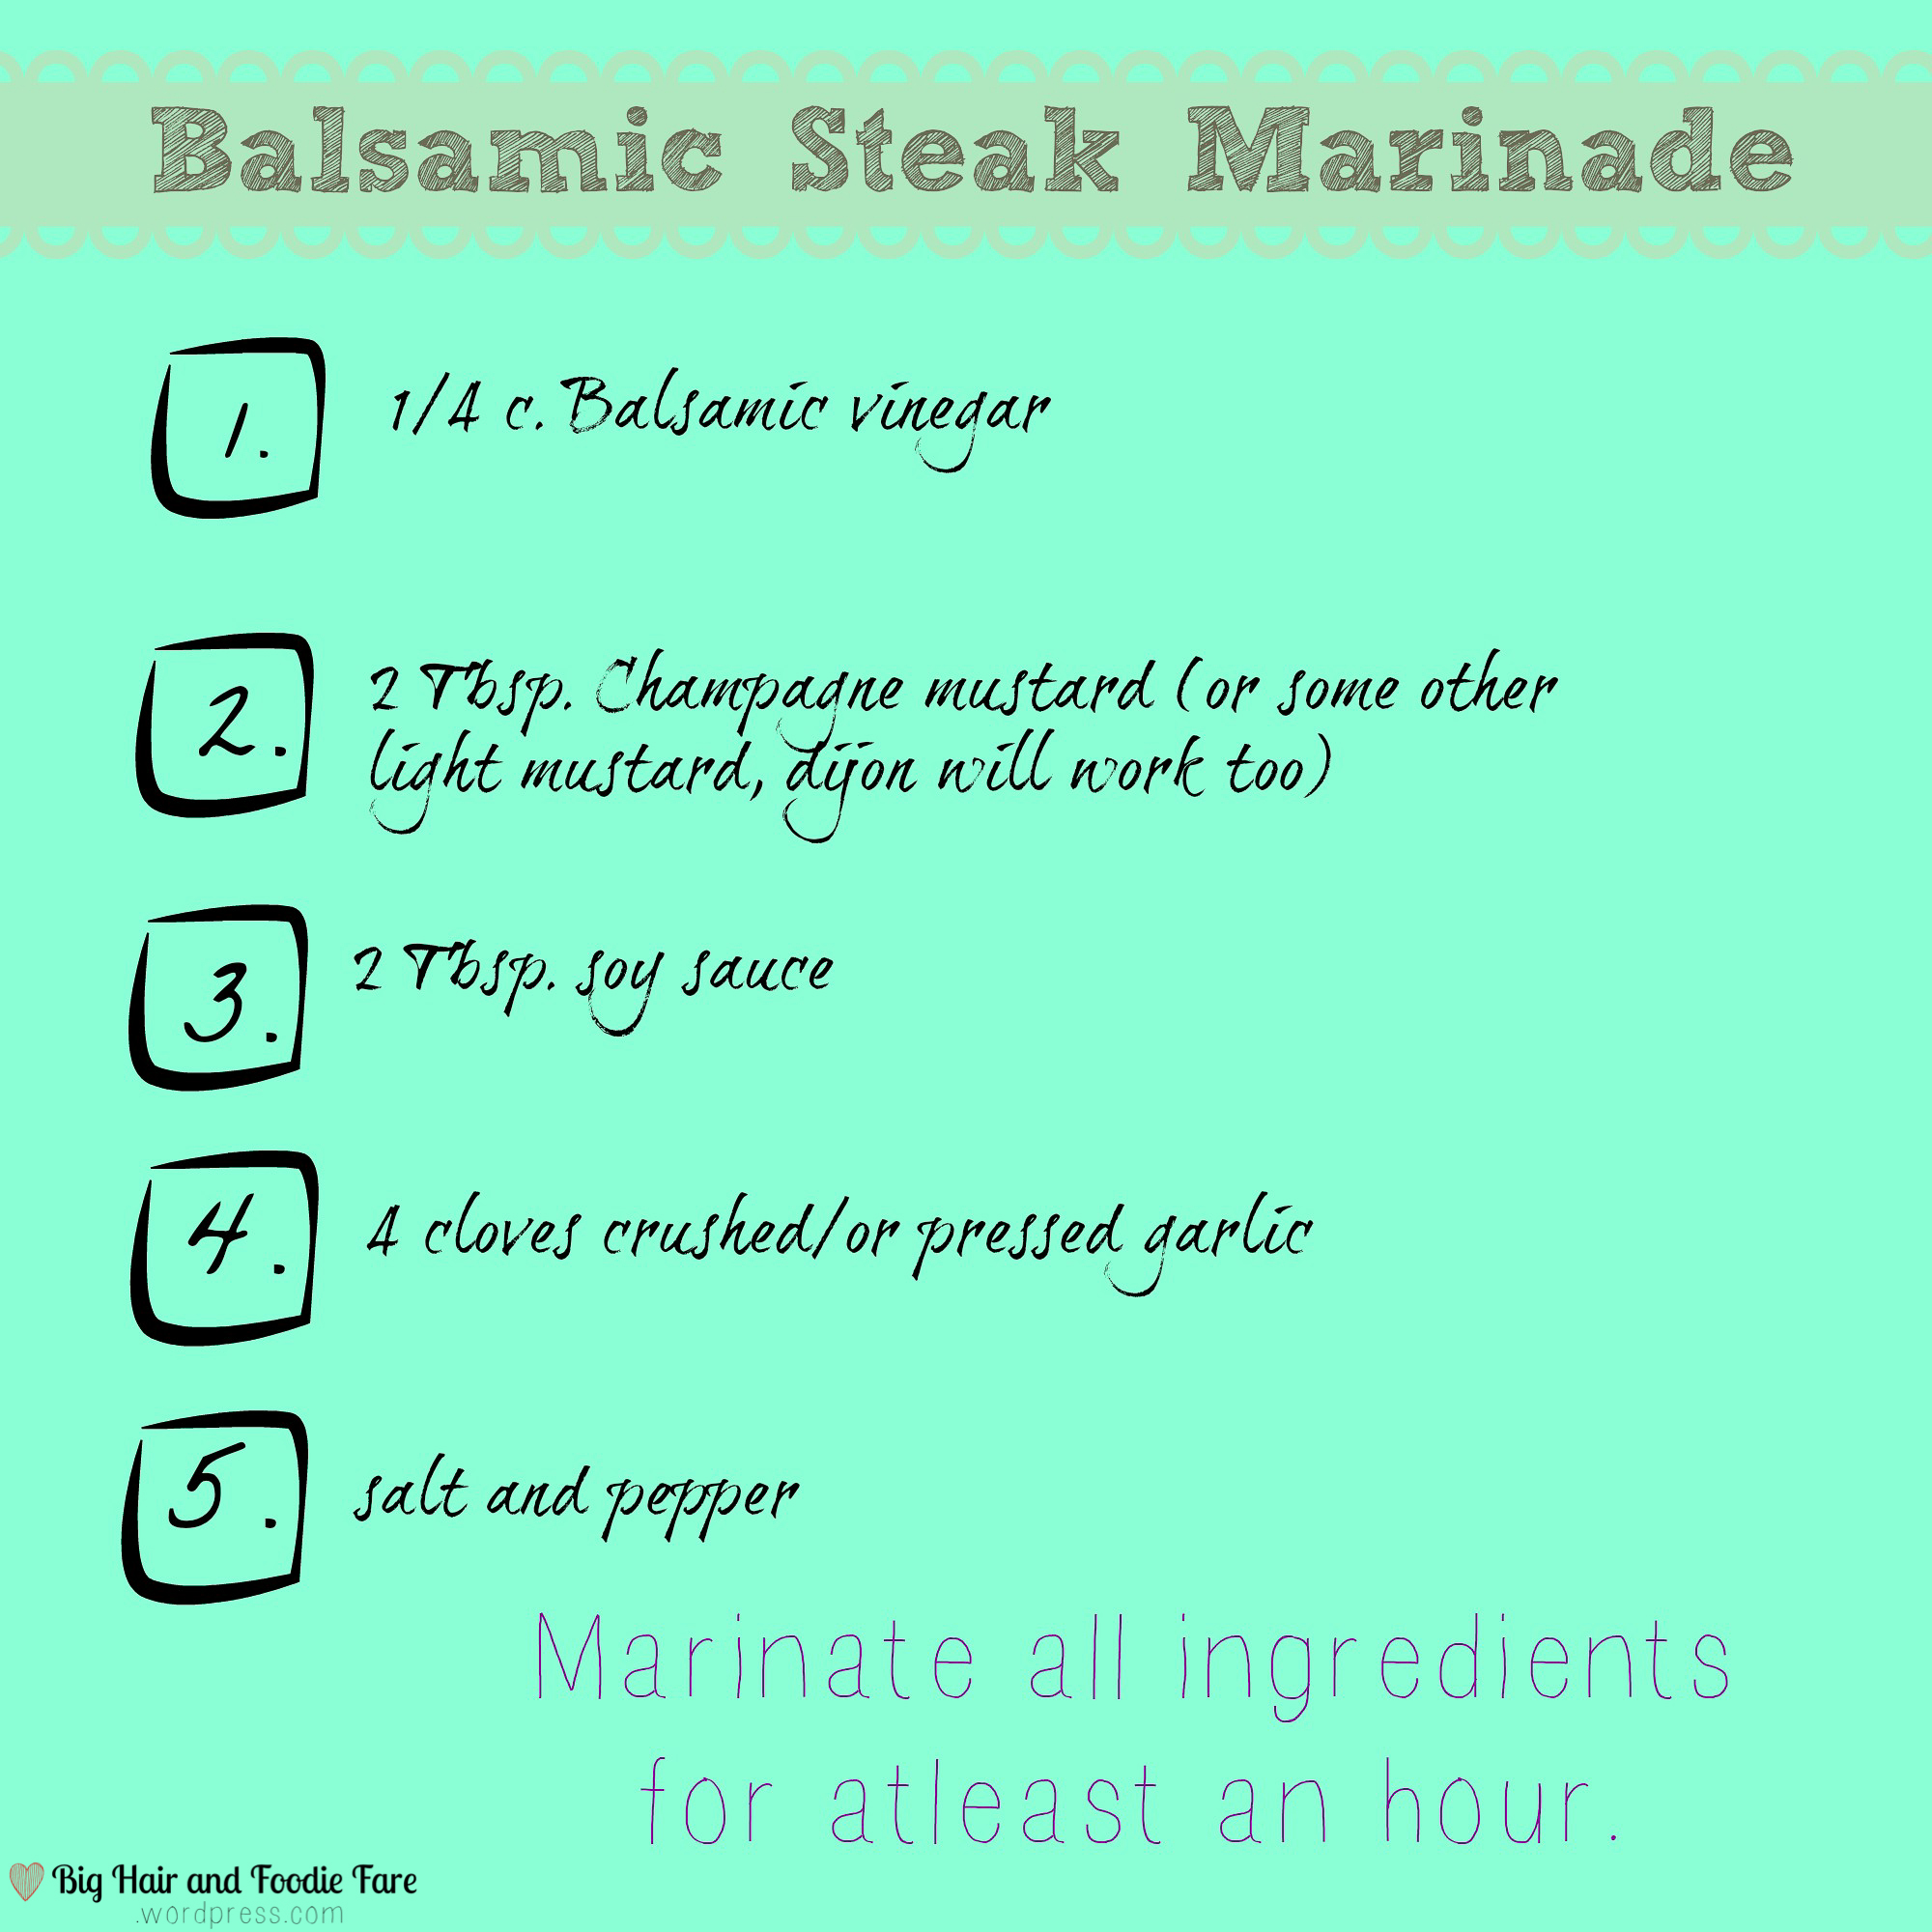 Balsamic strip steak marinade